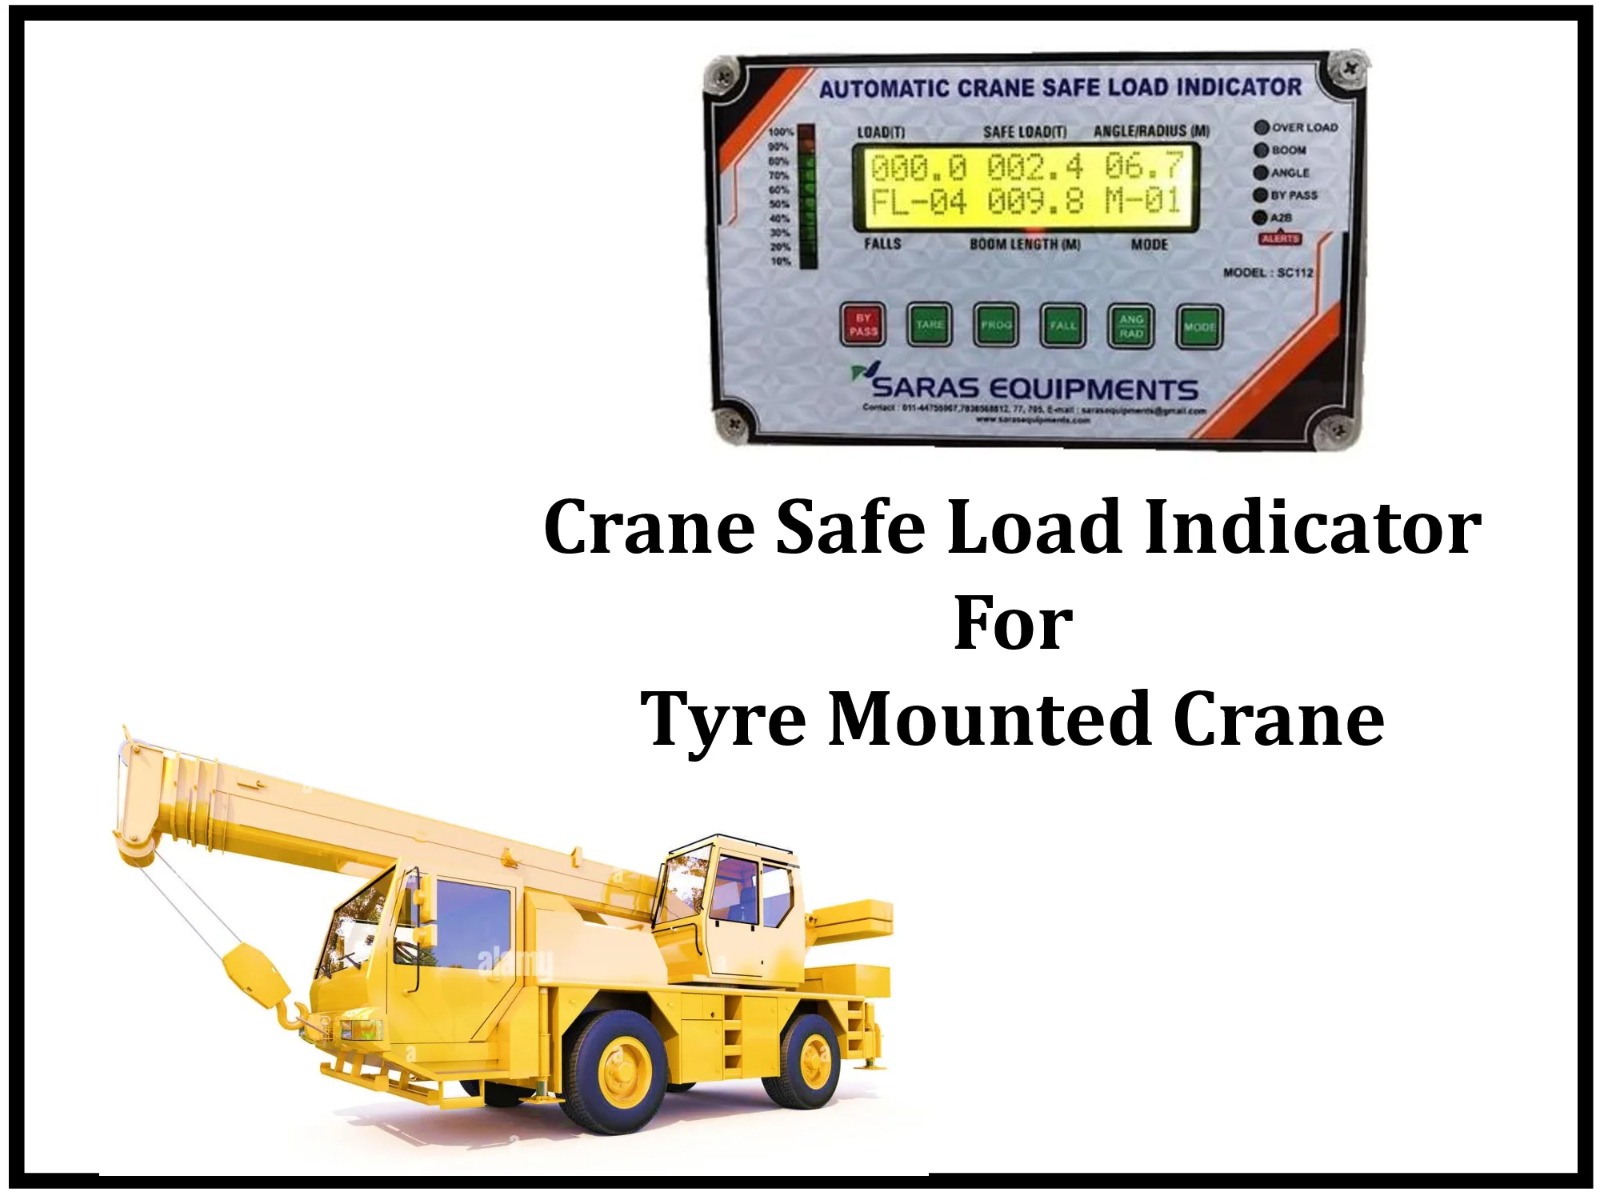 Crane Safe Load Indicator for Tyre Mounted Crane